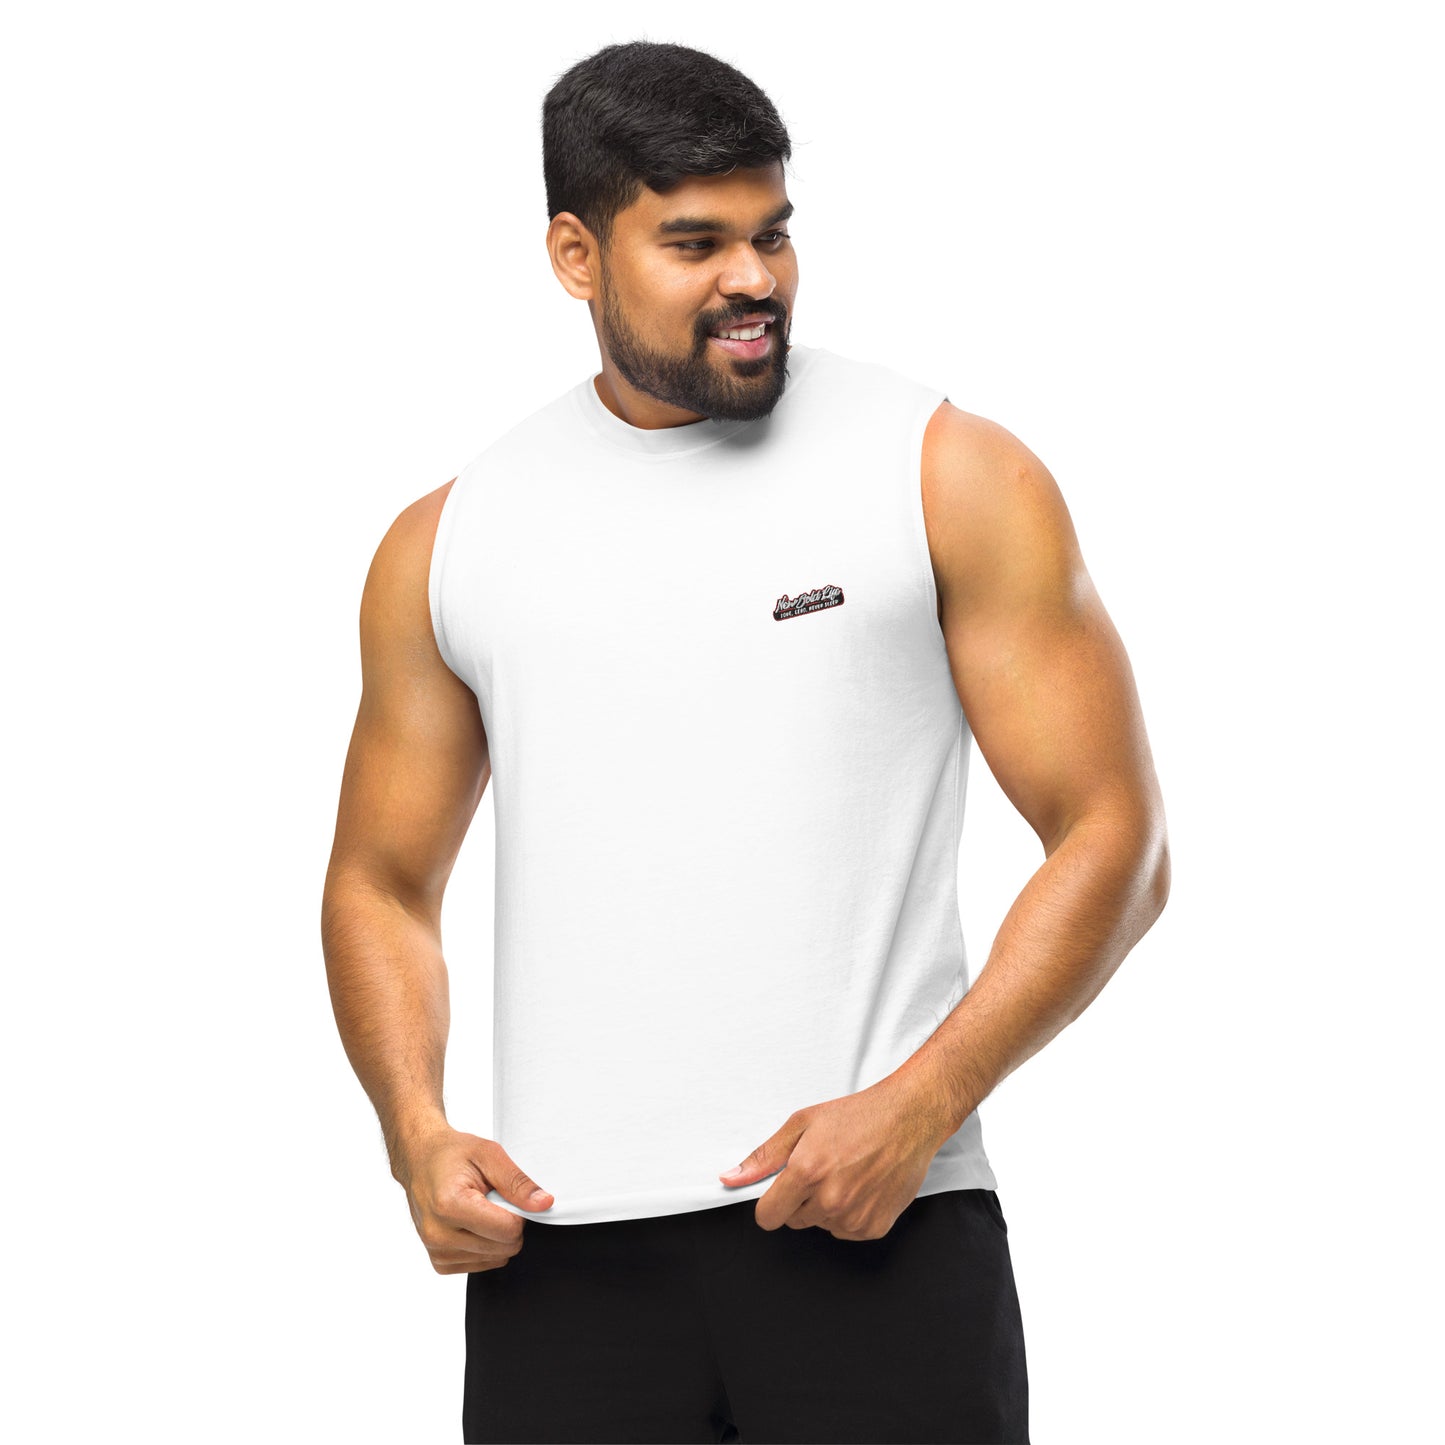 NBL-Muscle Shirt - Men's Clothing